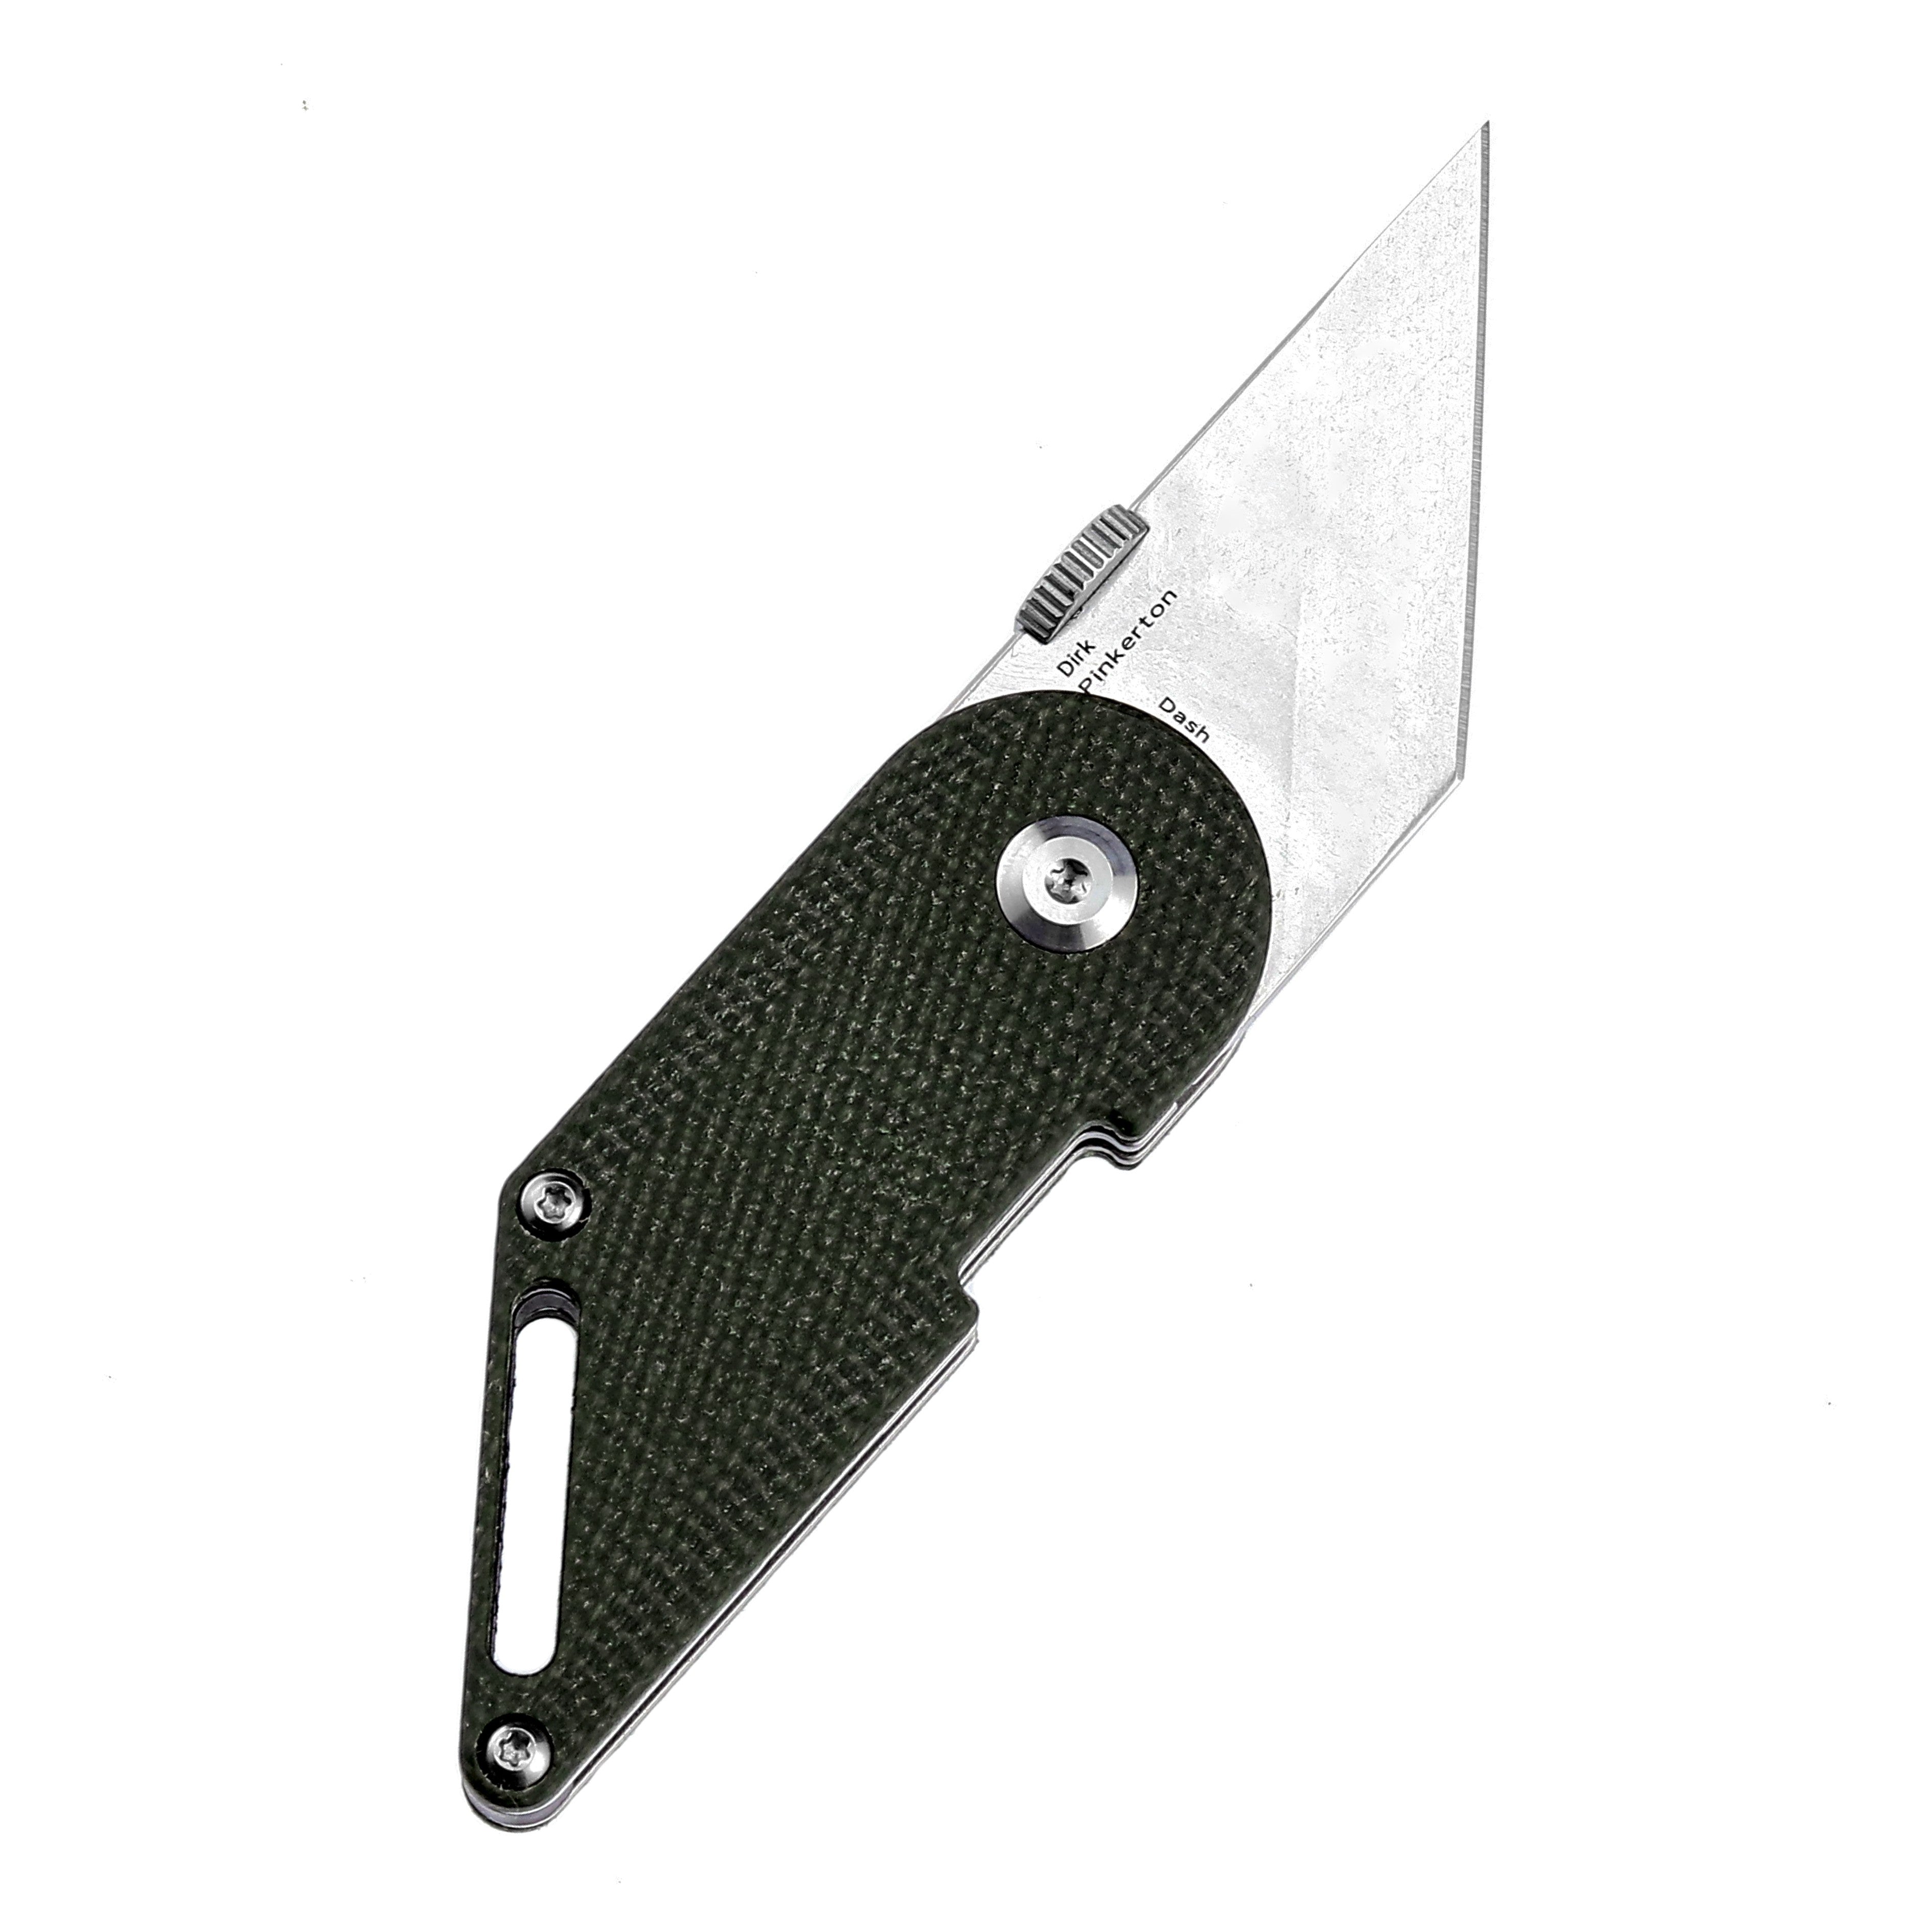 Kansept 刀具 Dash T3045A5 154CM 刀片米卡塔内衬锁 Edc 刀具